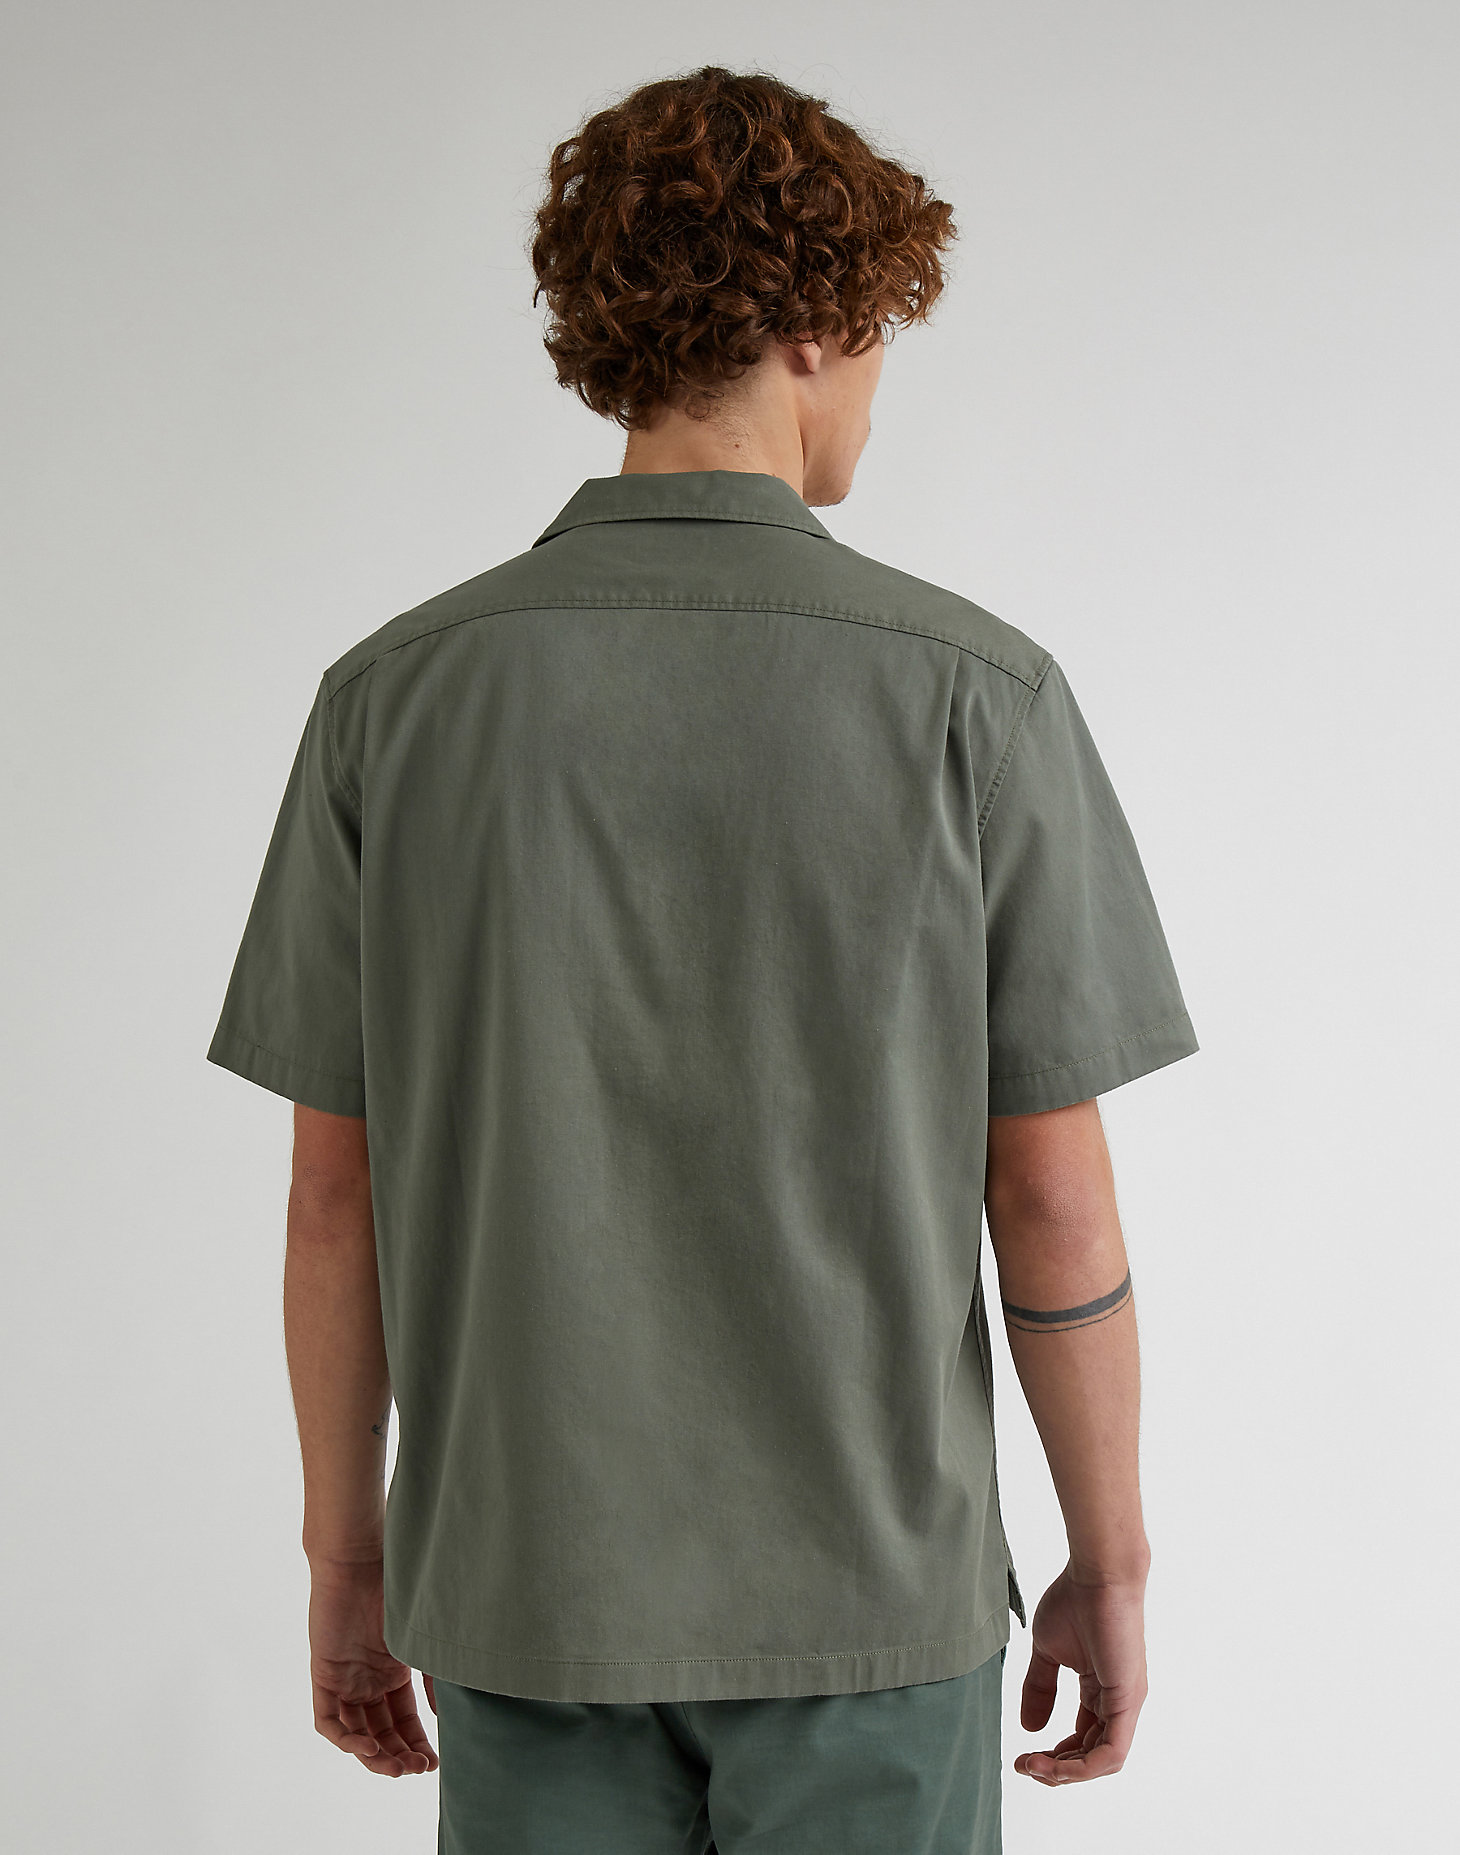 Short Sleeve Chetopa Shirt in Fort Green alternative view 1